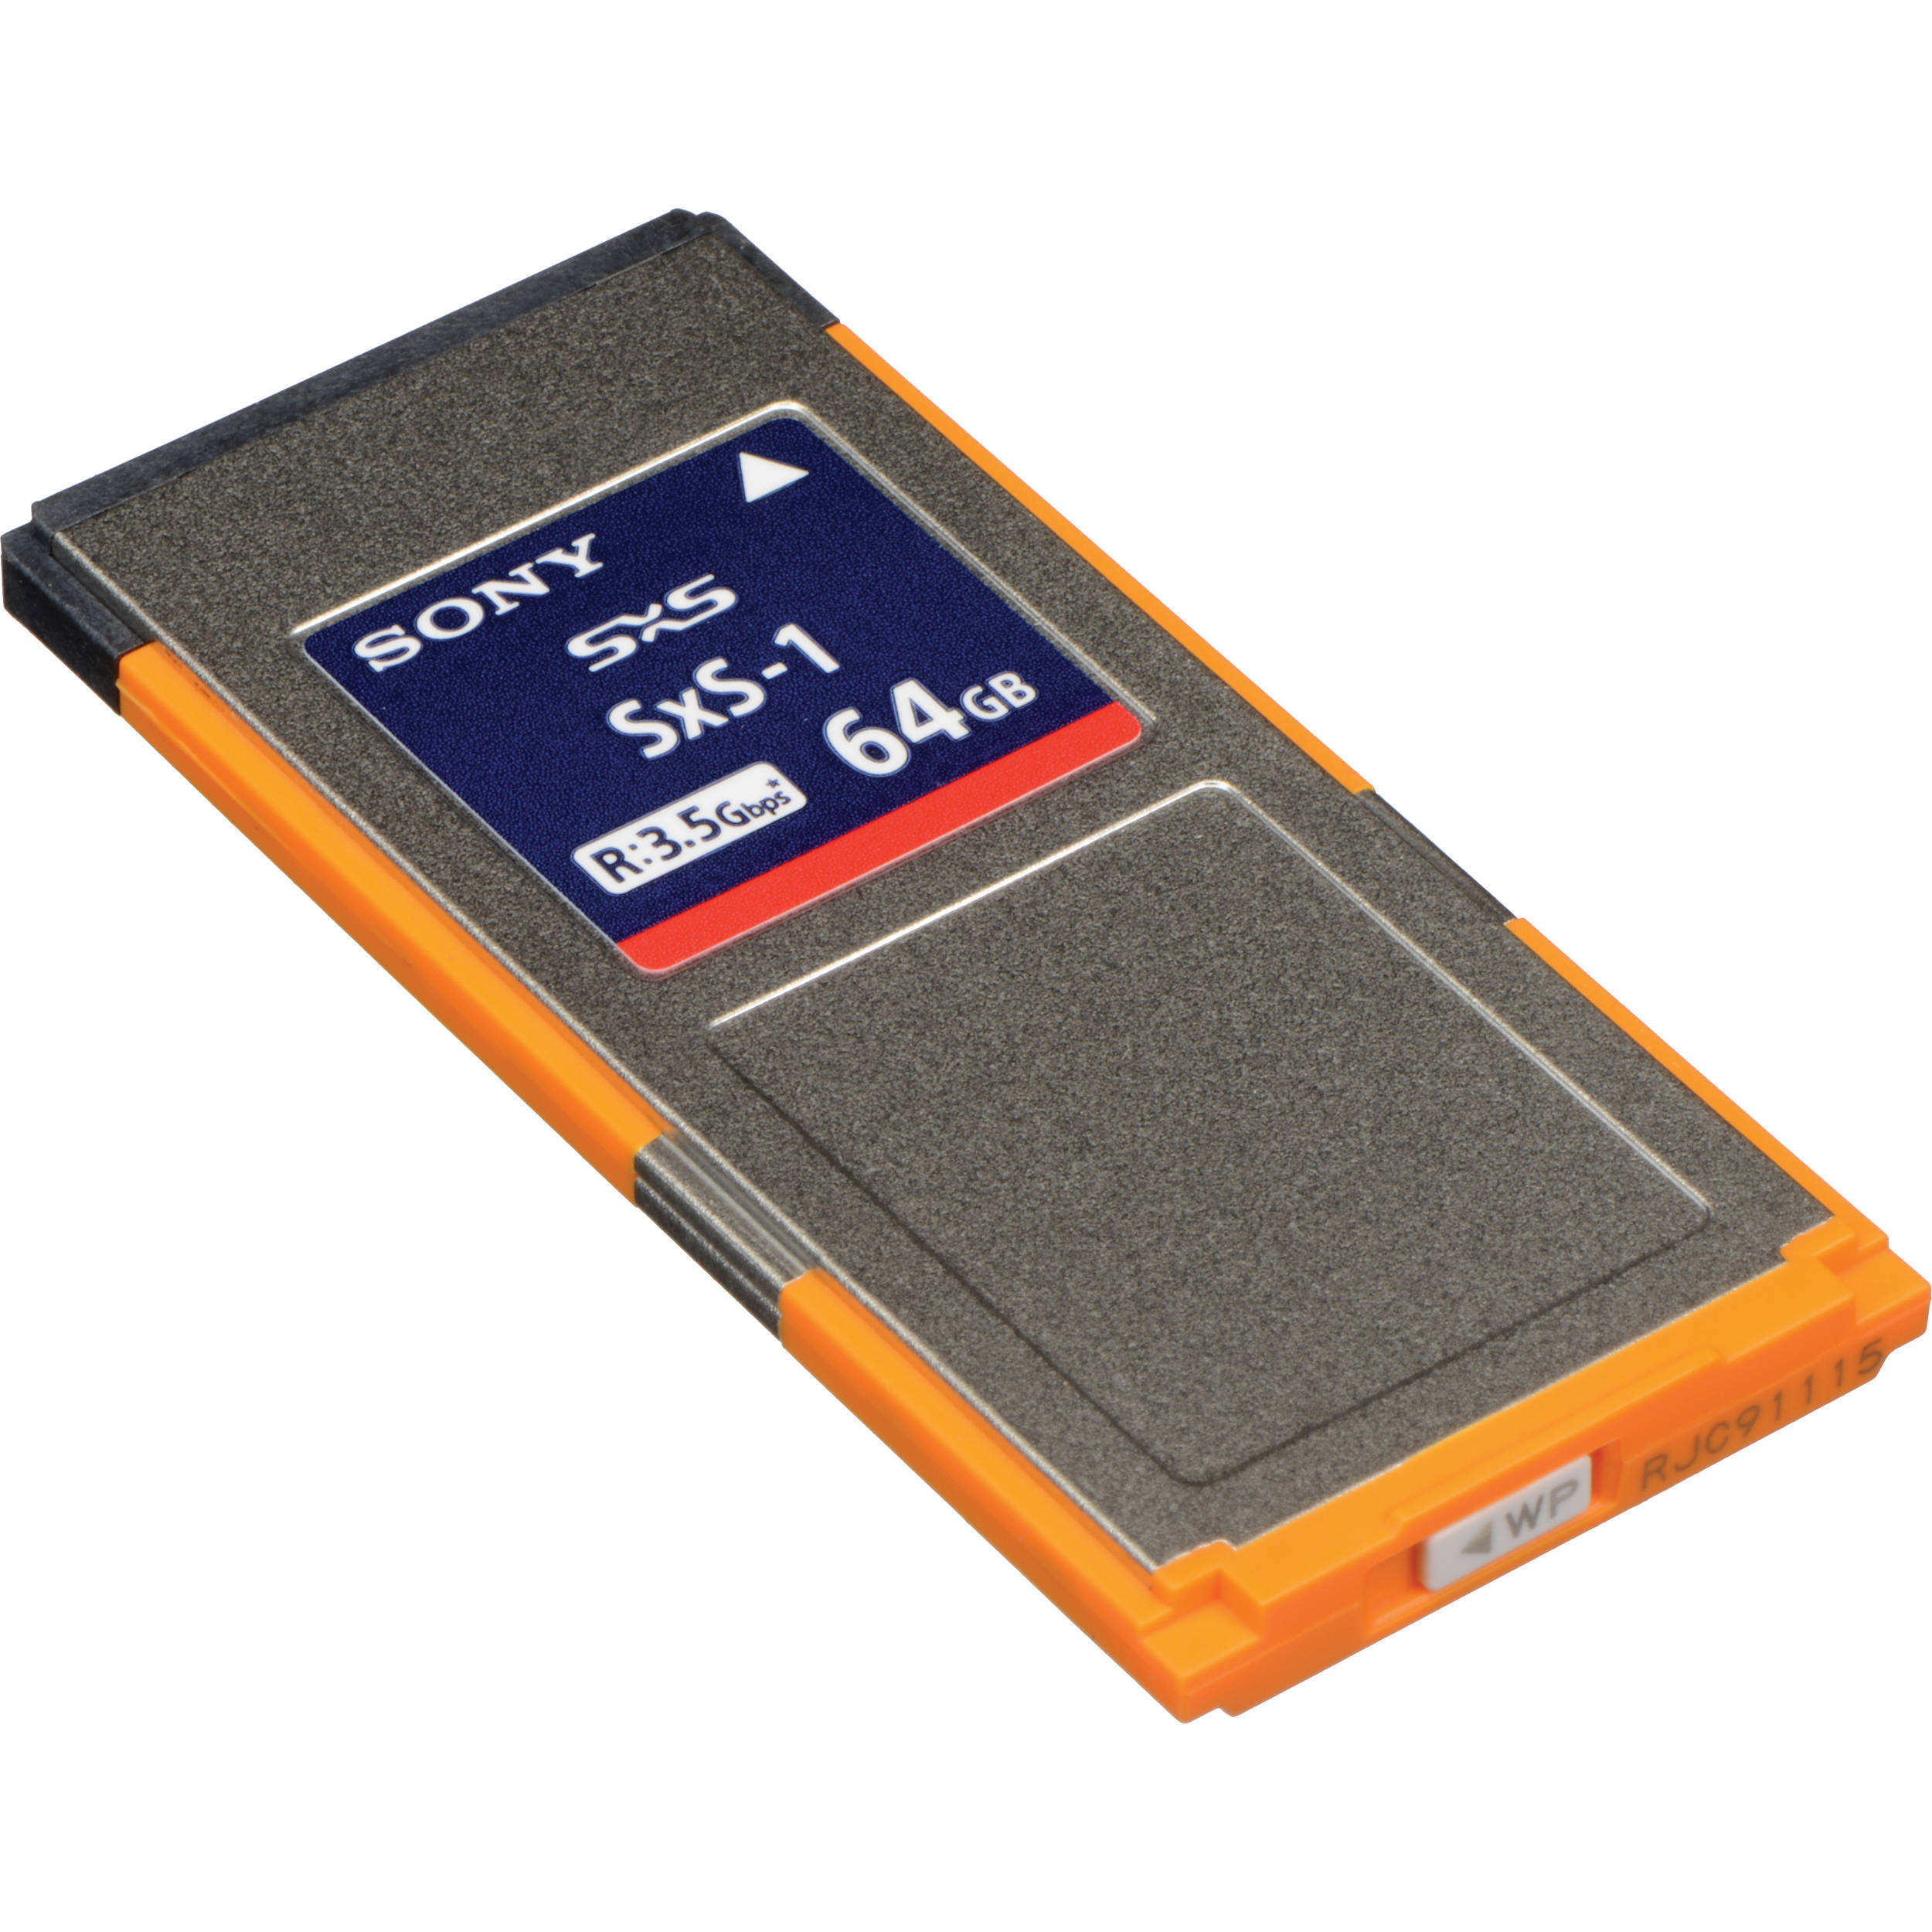 Sony Professional SxS-1 64GB G1B Memory Card